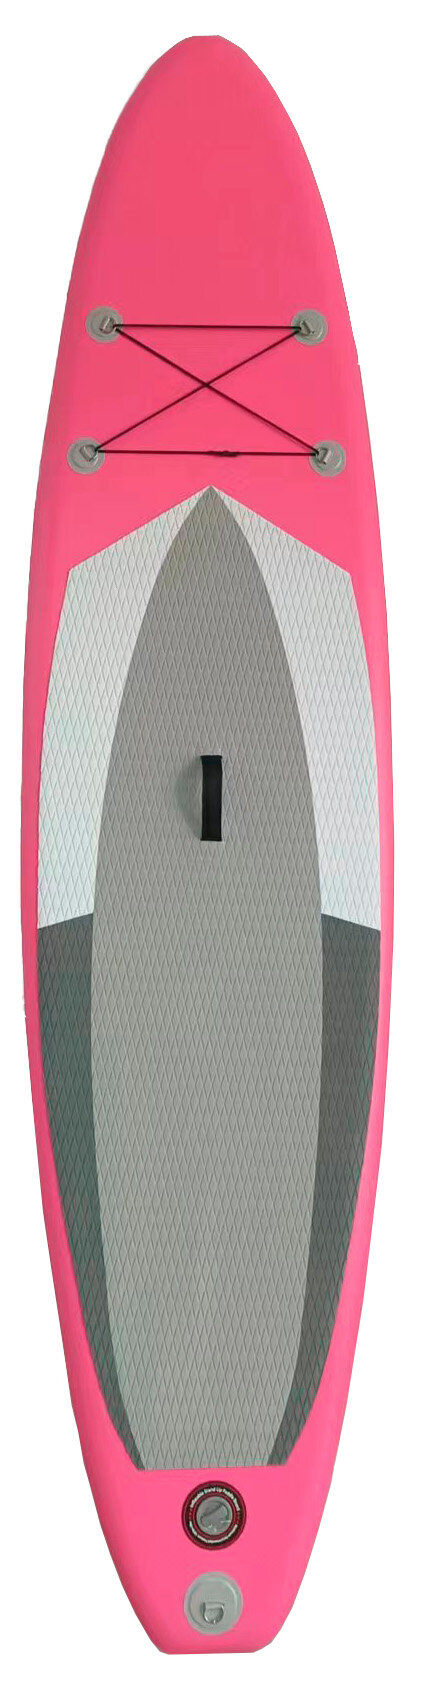 Сапборд Xiaomi Supboard 305*76*15см Pink